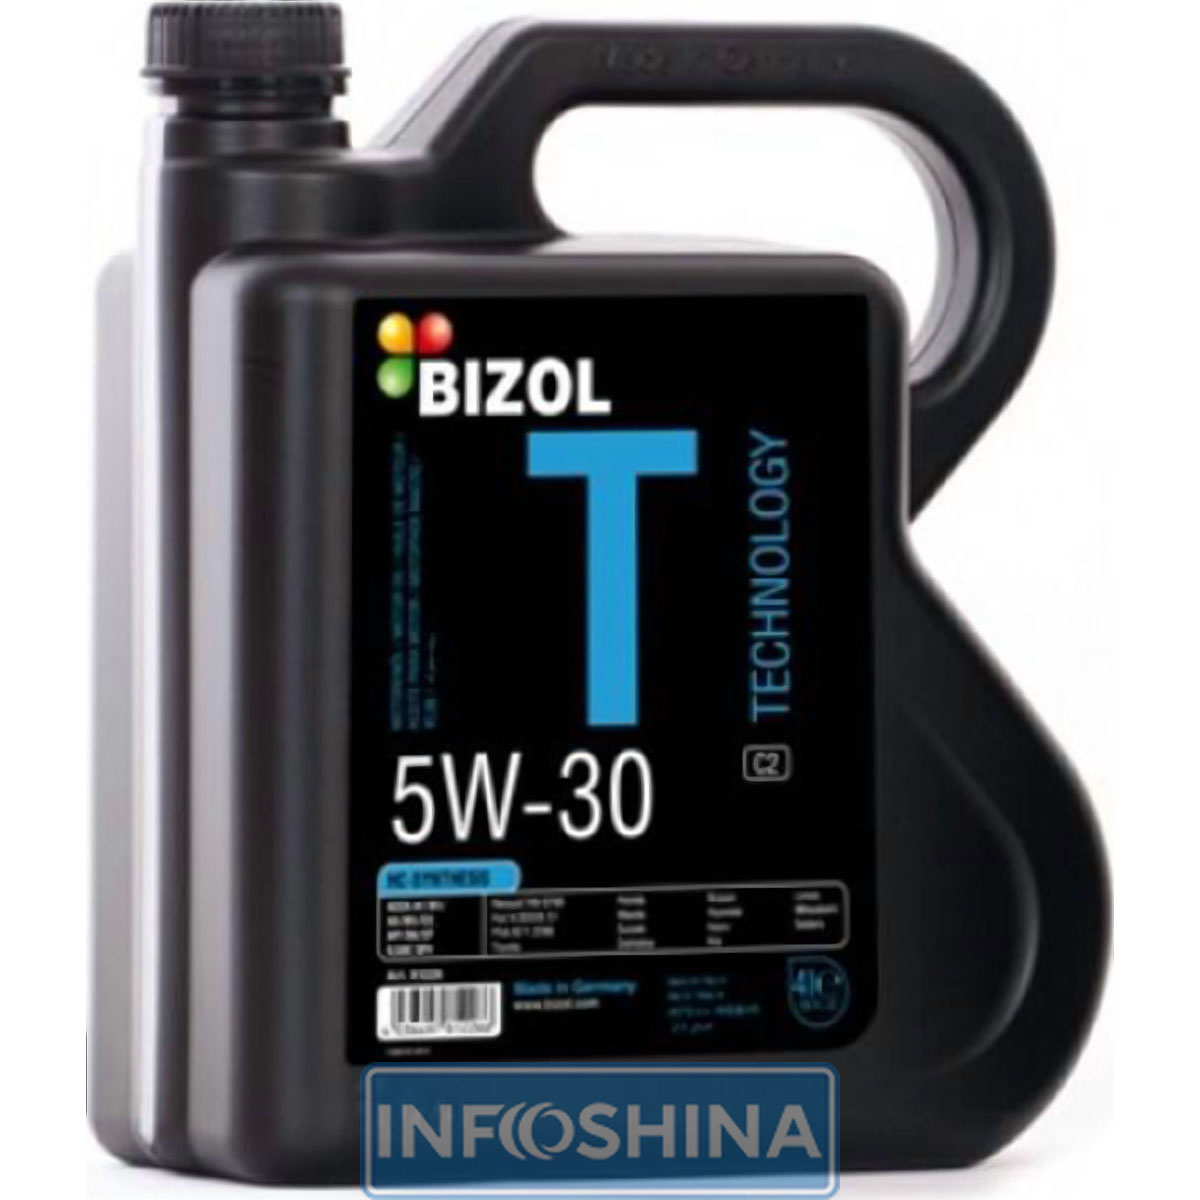 Bizol Technology C2 5W-30